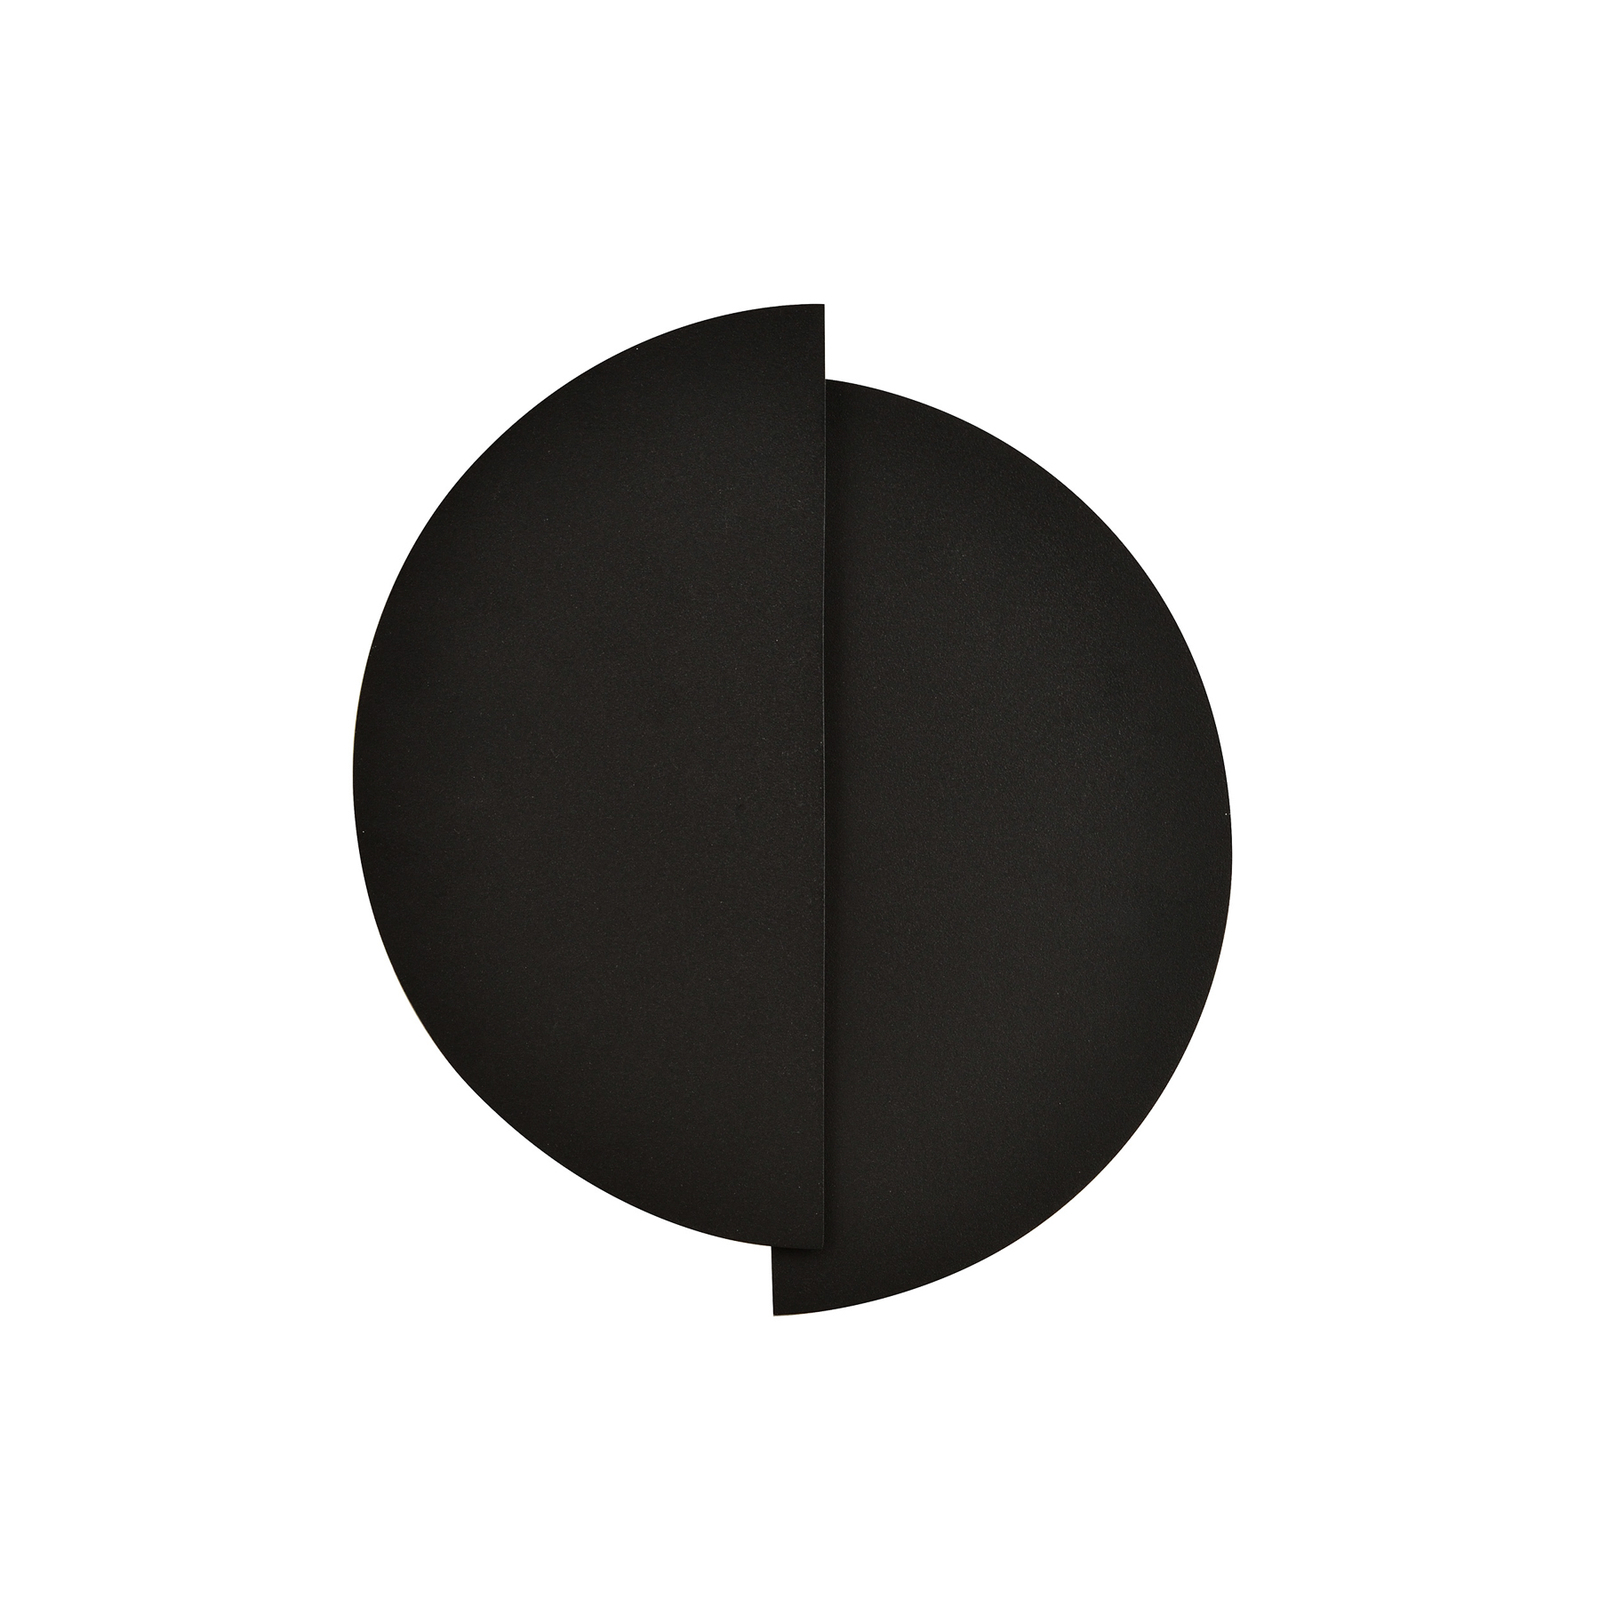 Wandlamp vorm 9, 28 cm x 32 cm, zwart